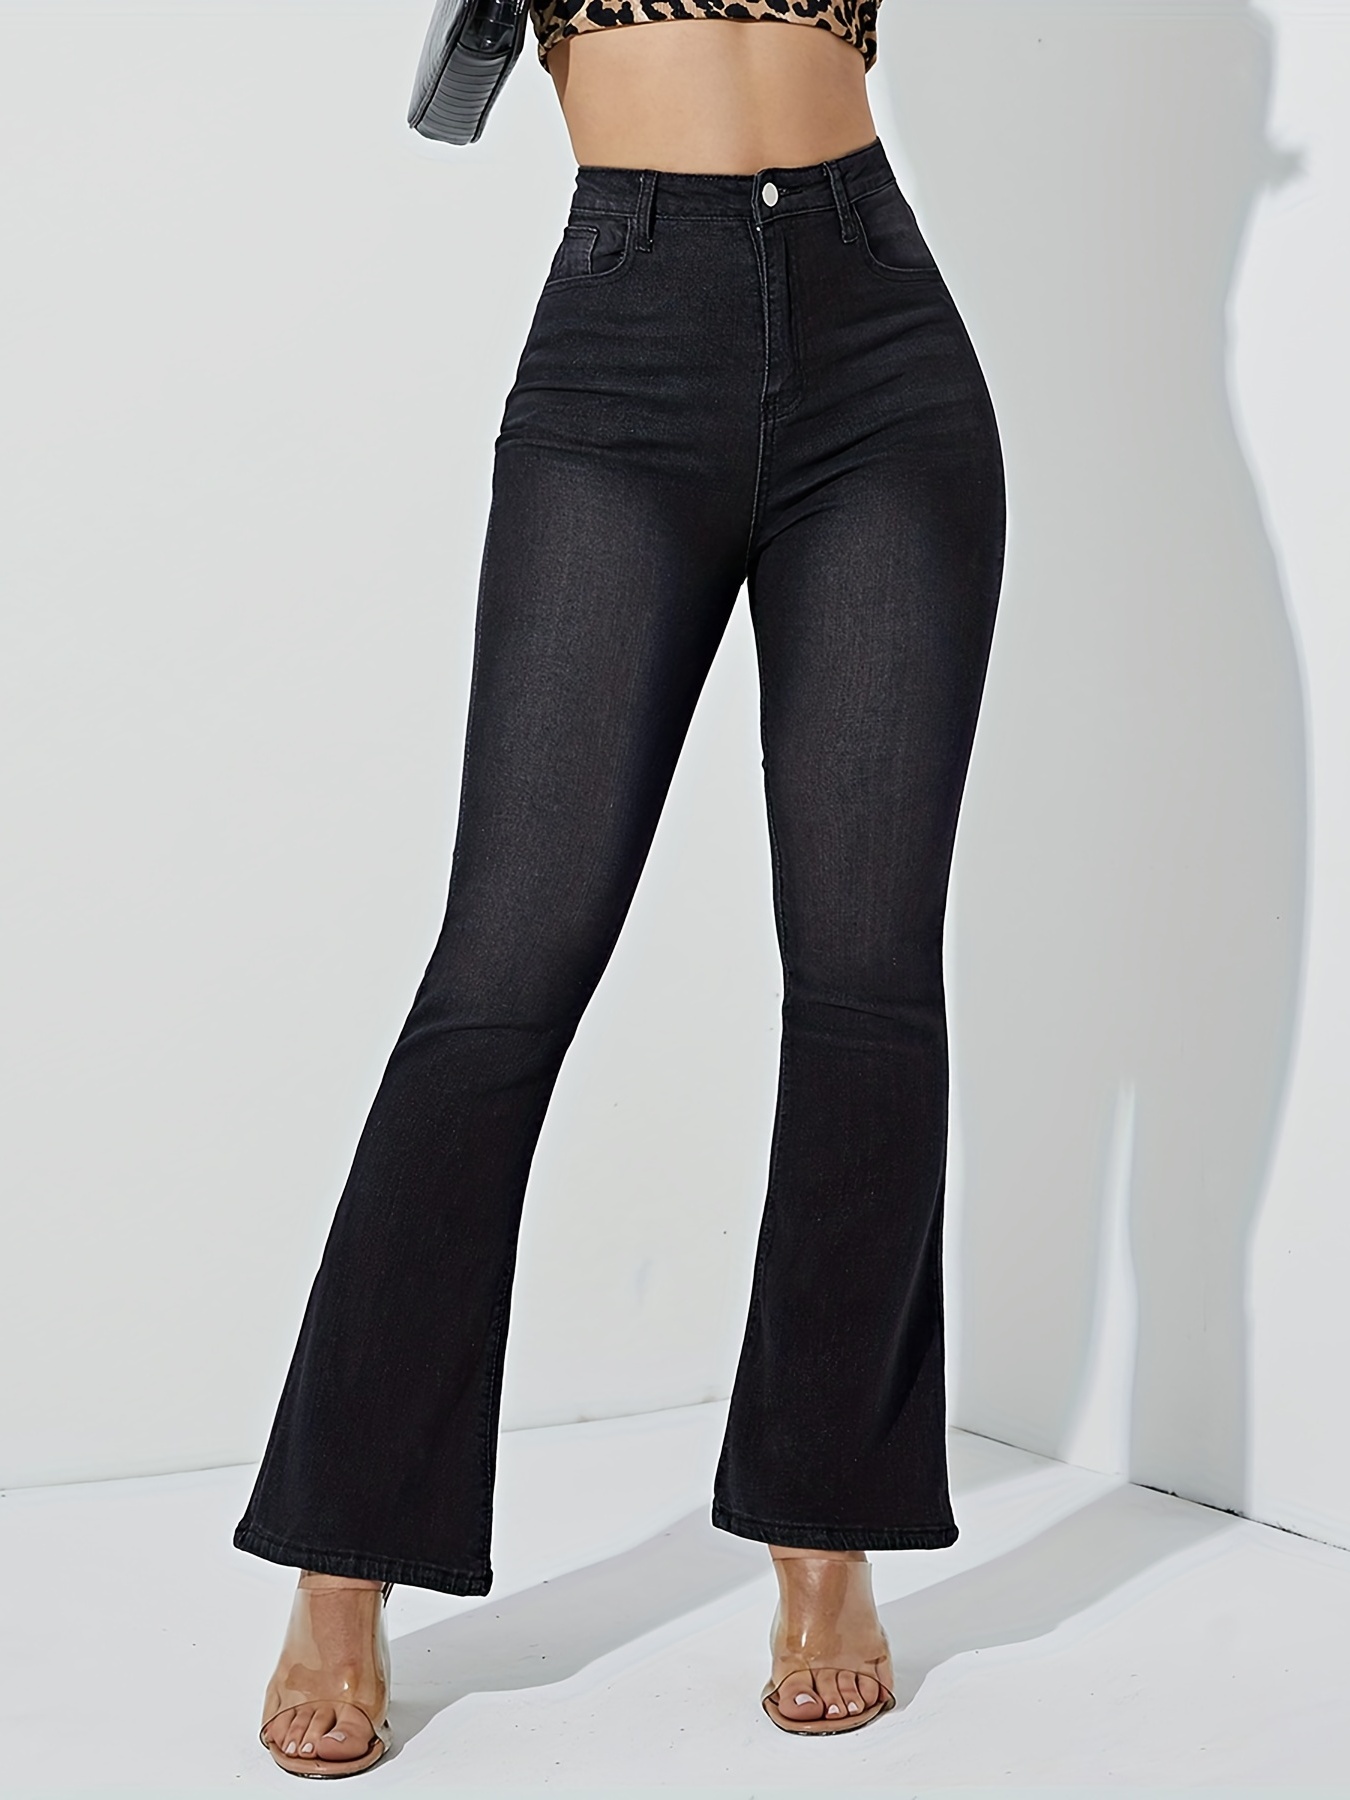 Bowknot Waistband Flare Leg Jeans, Plain Black Medium Stretch Vintage Y2K  Style Denim Pants, Women's Denim Jeans & Clothing